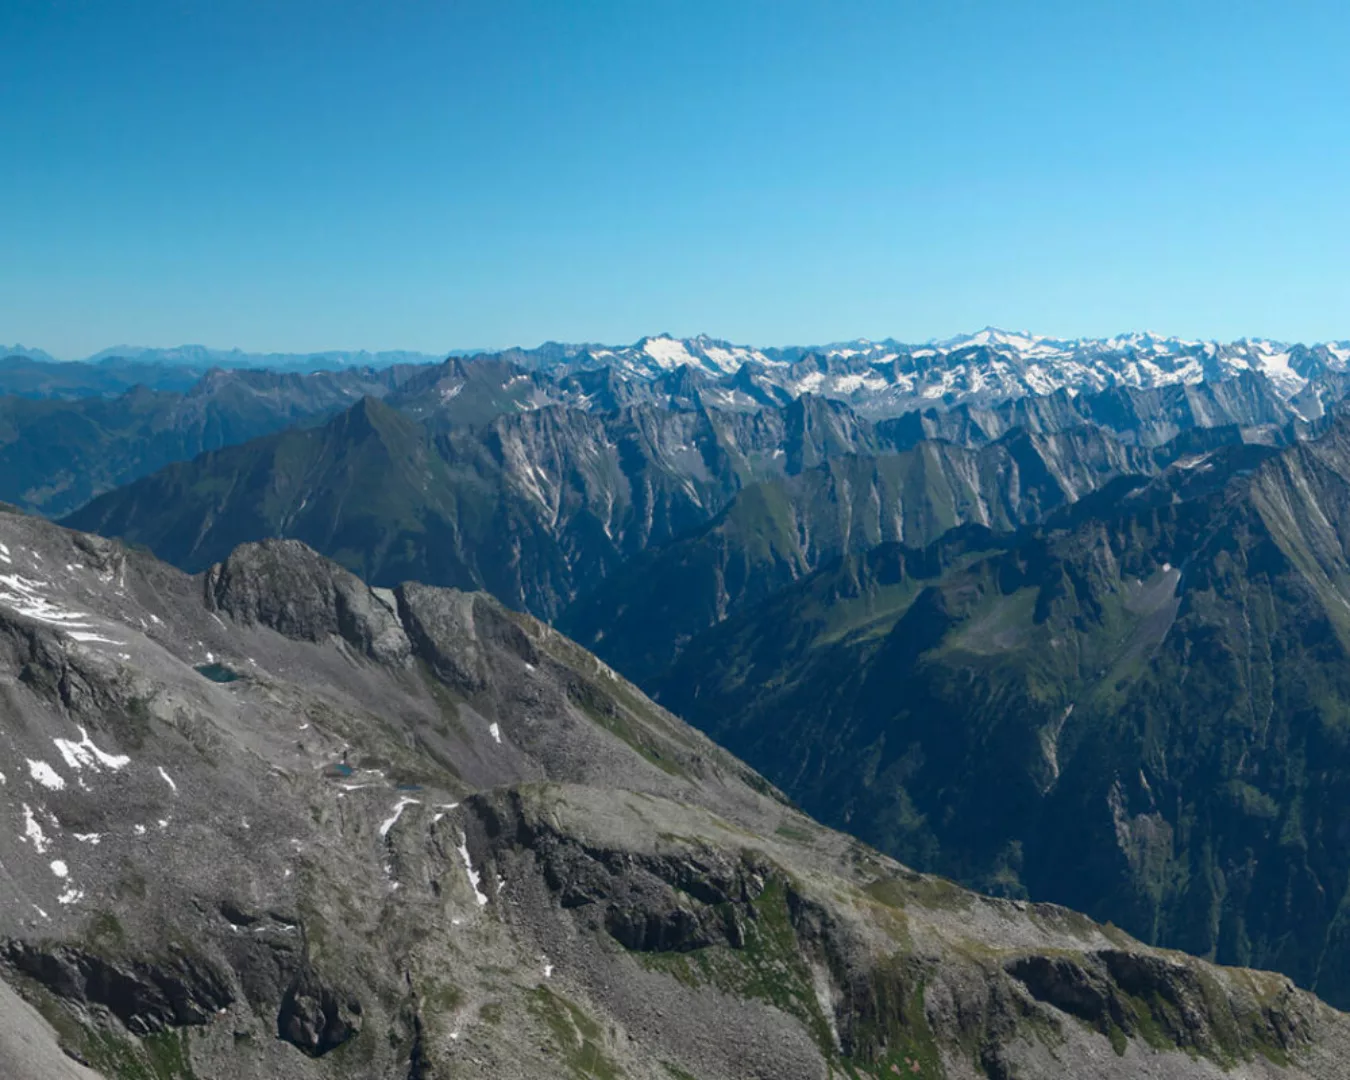 Fototapete "Alpengebirge" 4,00x2,50 m / Strukturvlies Klassik günstig online kaufen